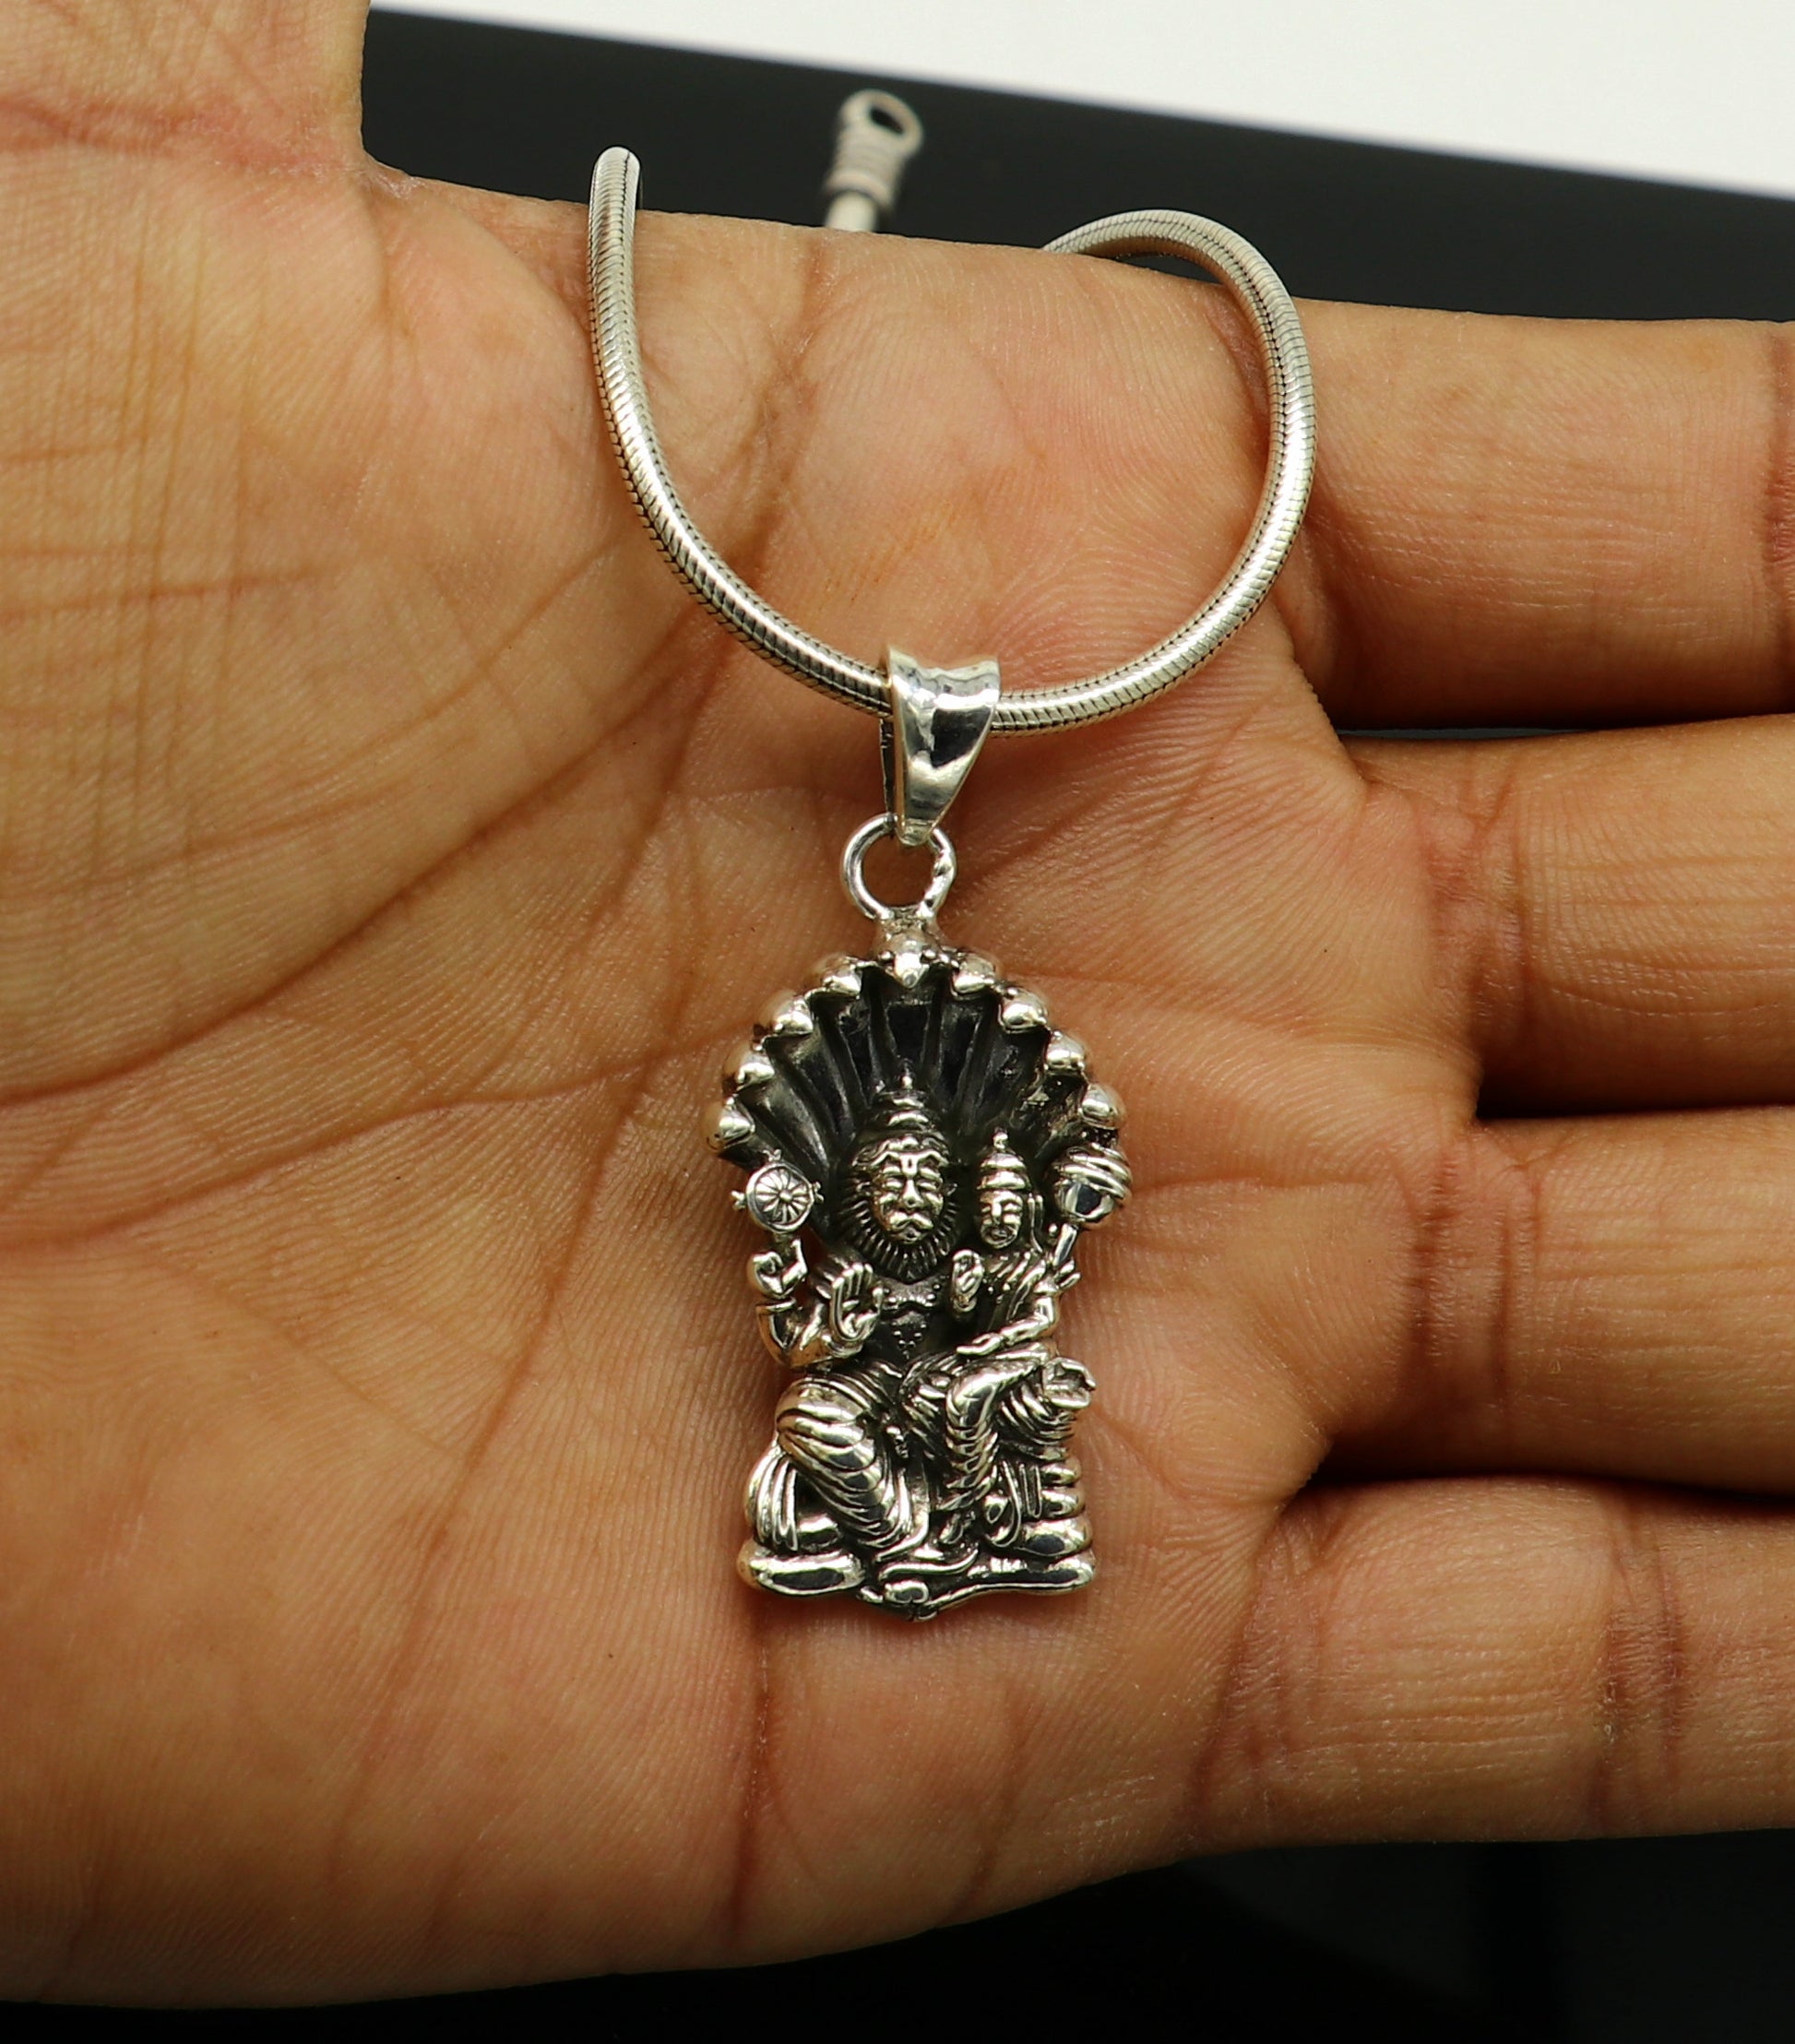 925 sterling silver handmade Vishnu with Laxmi (narsimha)pendant, amazing stylish unisex pendant locket personalized jewelry ssp445 - TRIBAL ORNAMENTS